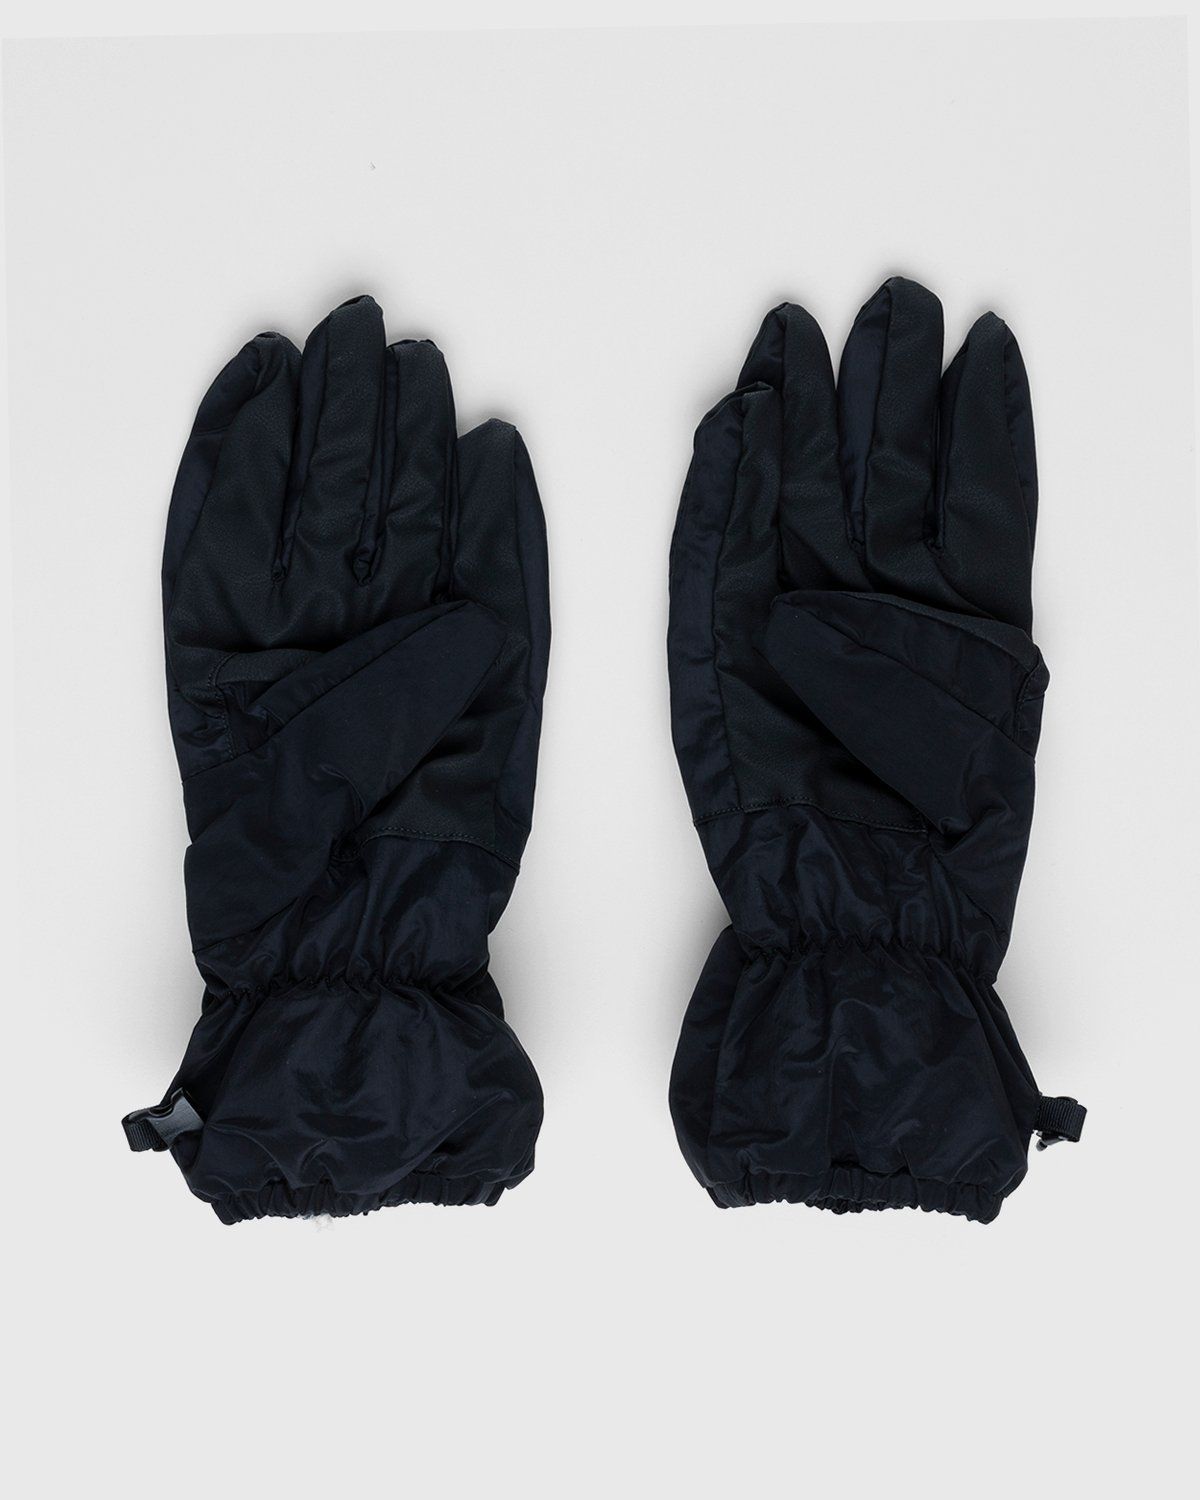 Stone Island – Gloves Black - 5-Finger - Black - Image 2